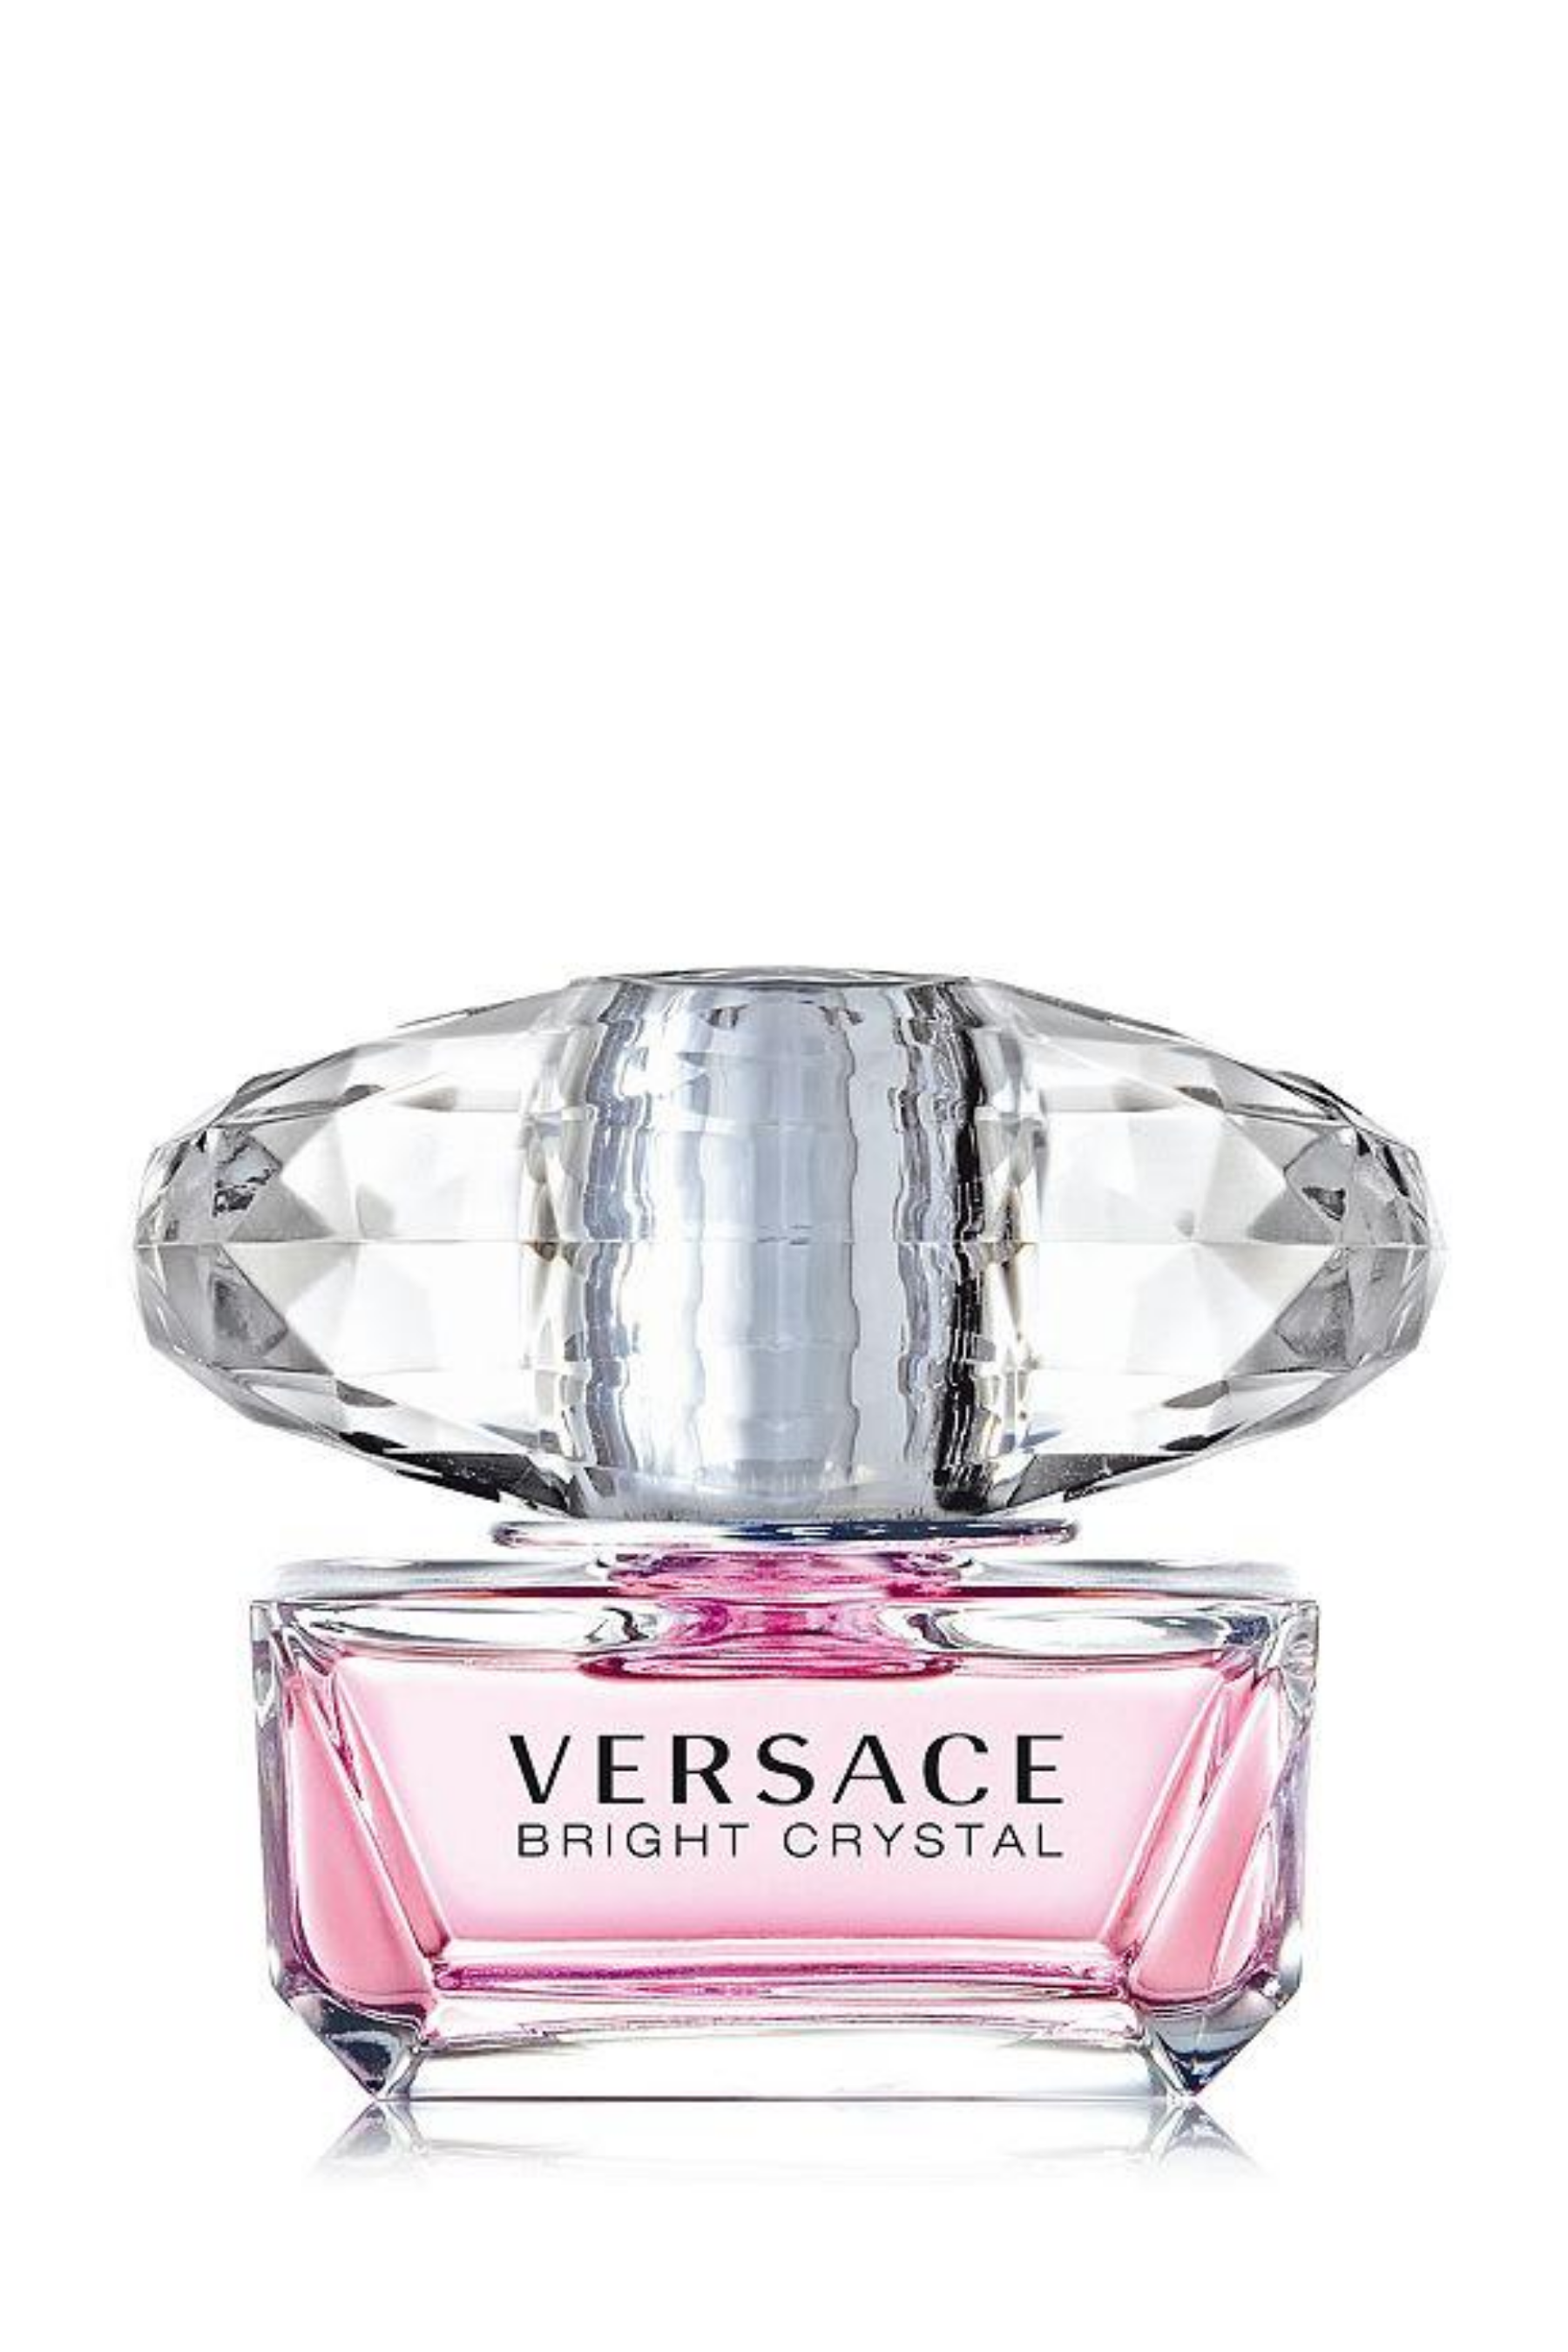 Versace | Bright Crystal 2 Piece Travel Set